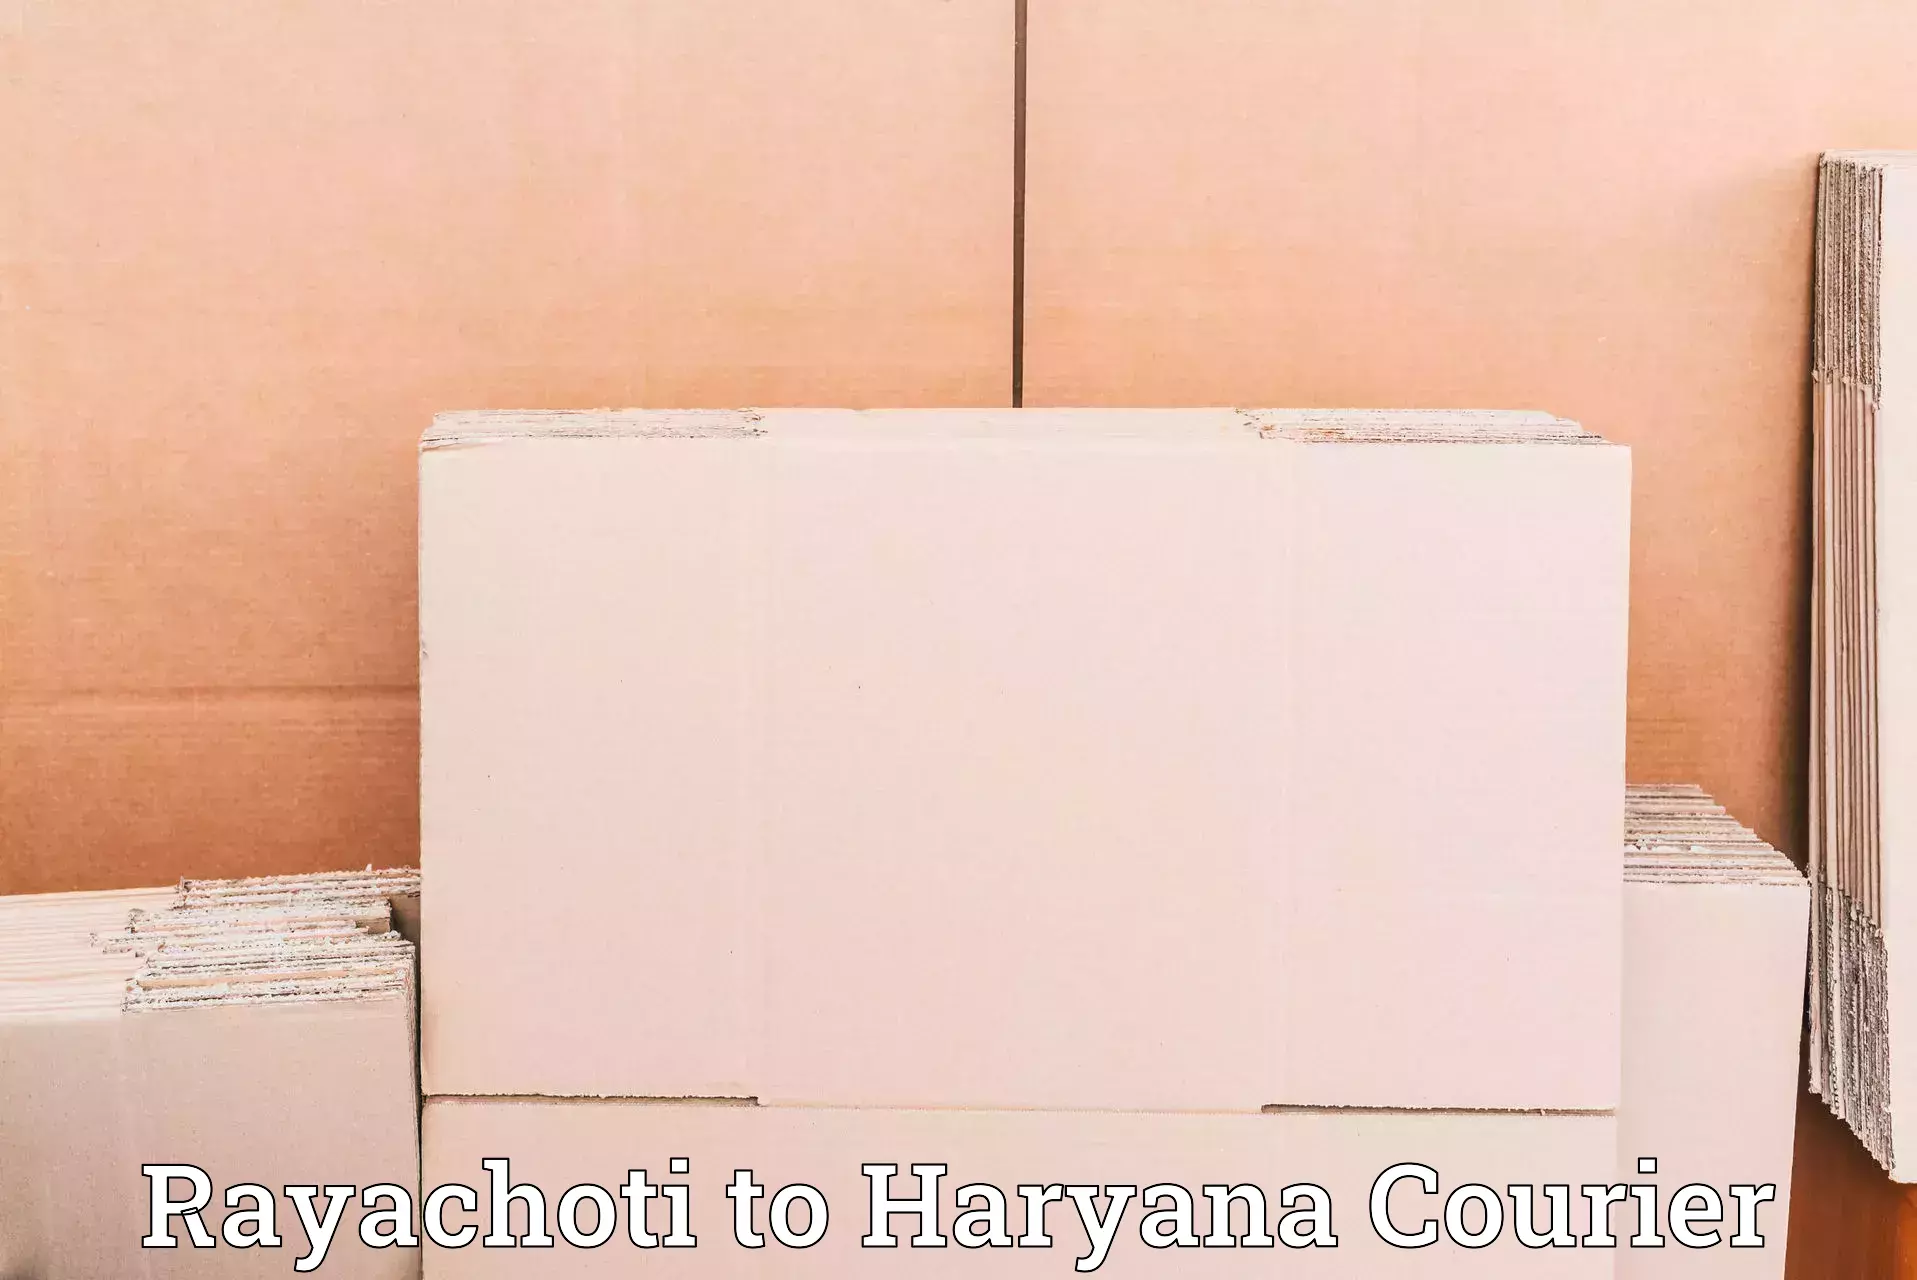 Courier service partnerships Rayachoti to NCR Haryana